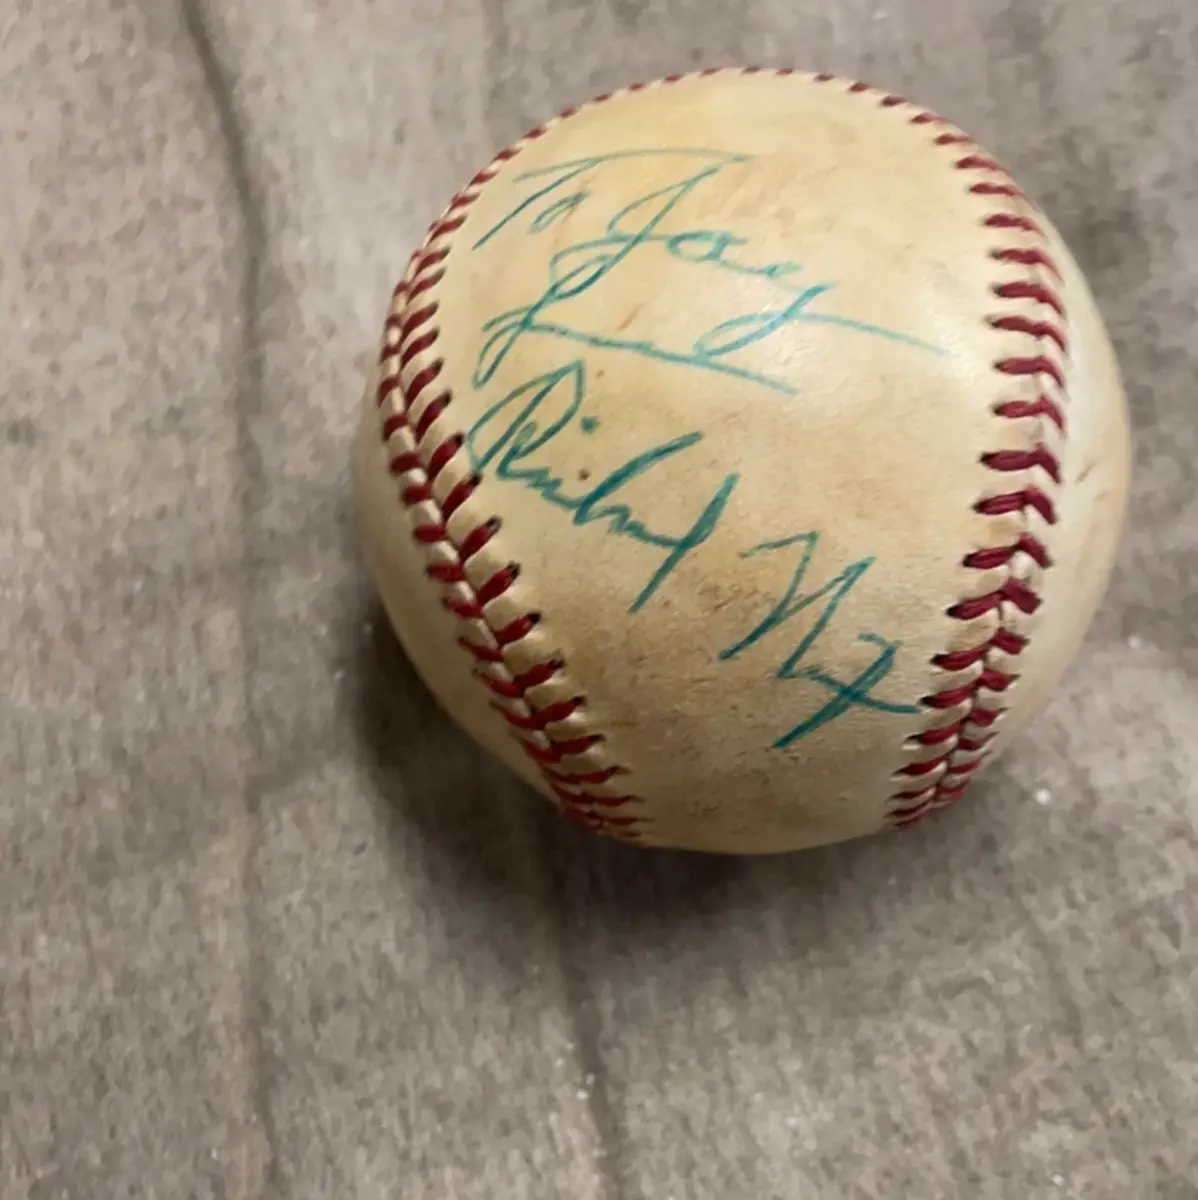 Baseball signed by former President Richard Nixon.